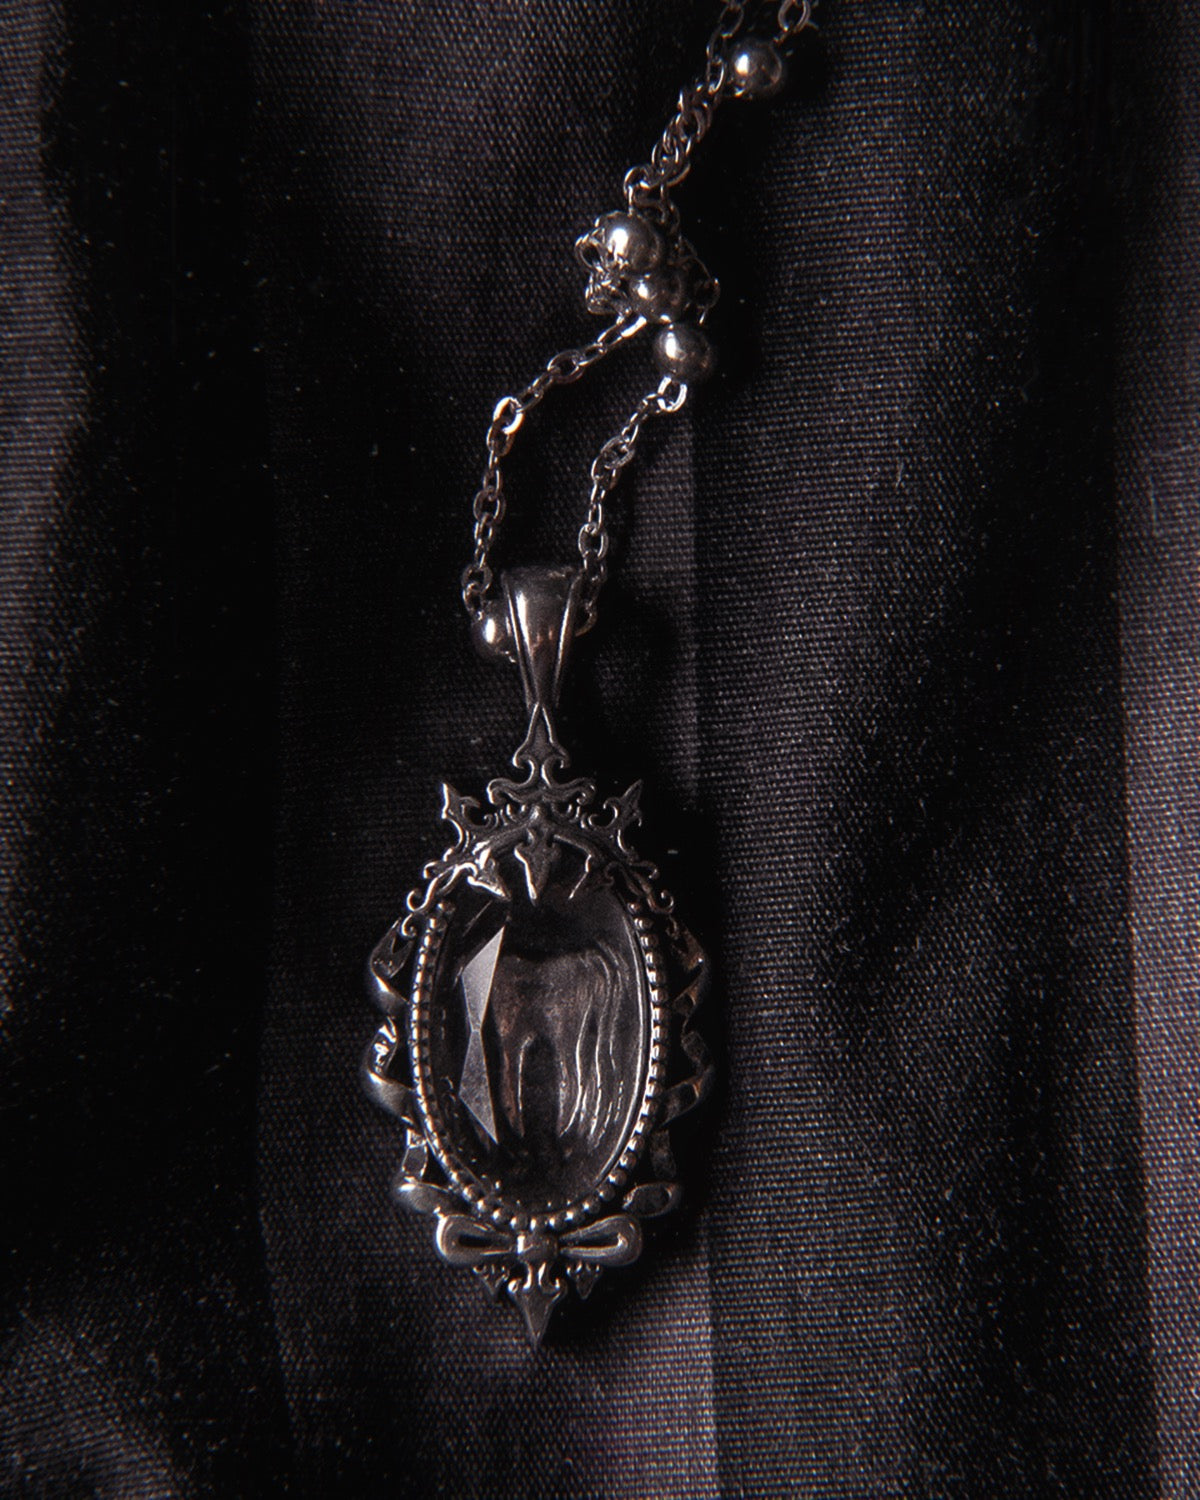 The "Black Ribbon Asylum" Glass Casket Necklace